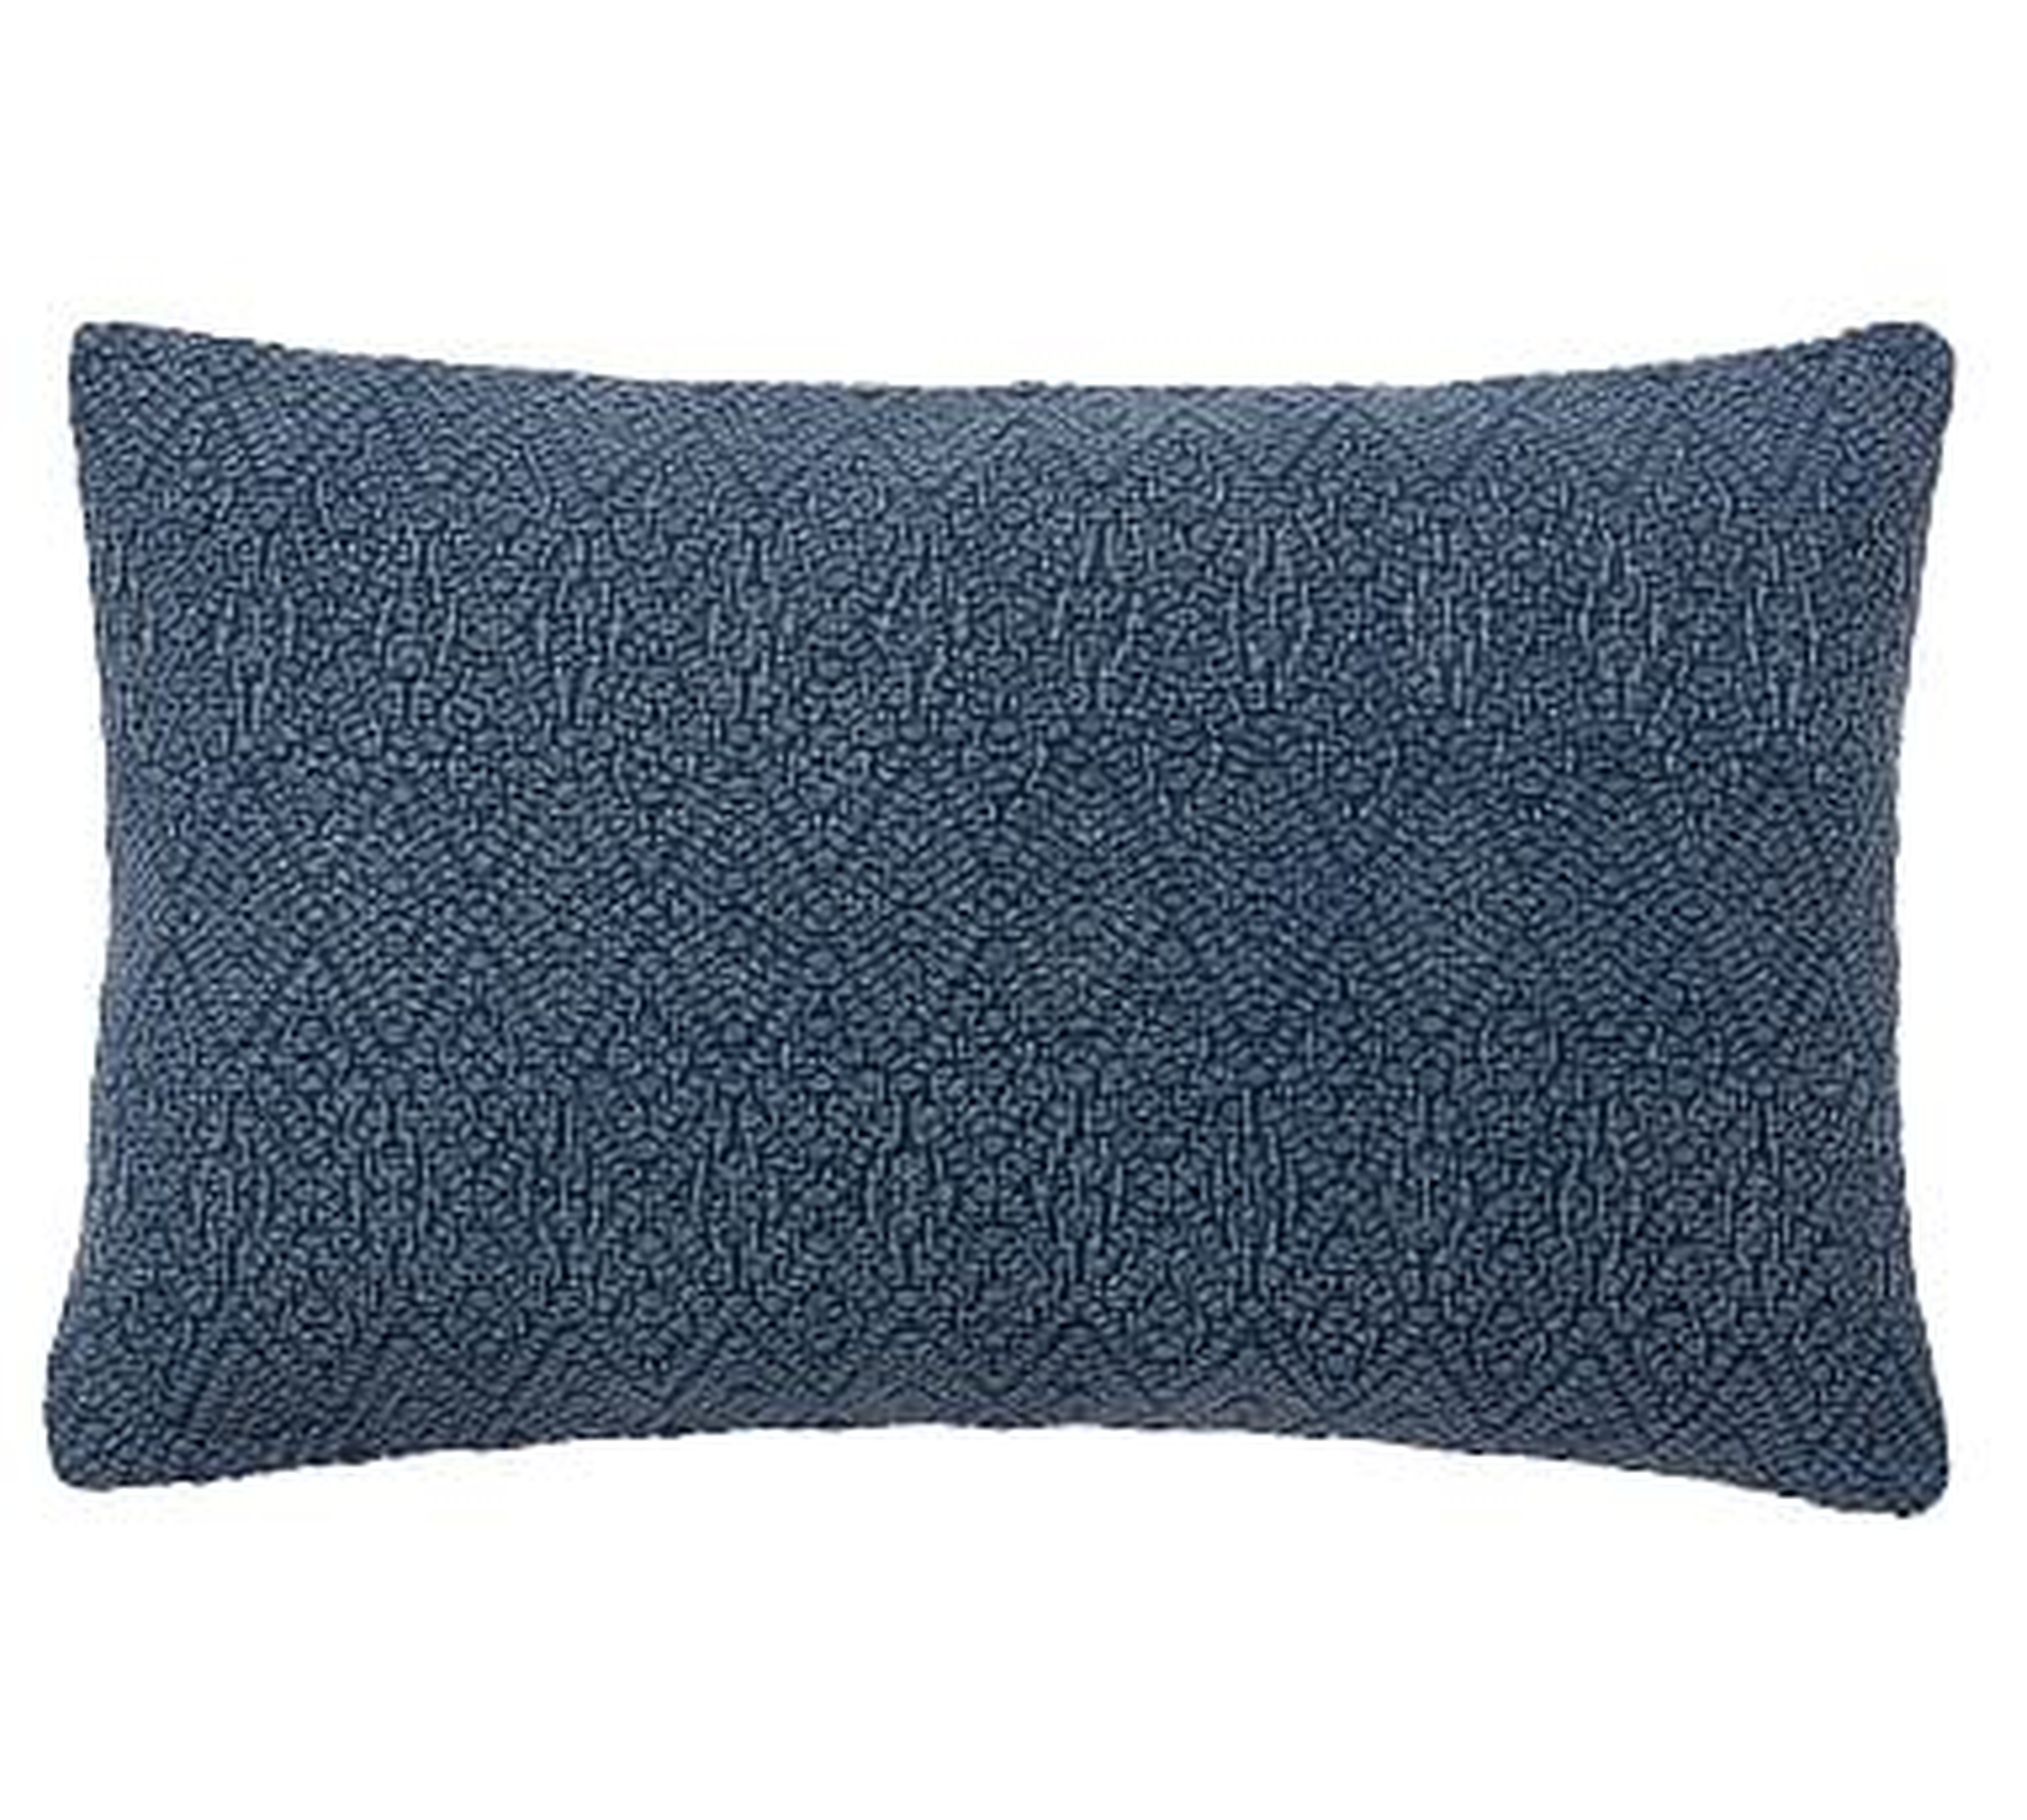 Washed Linen Diamond Lumbar Pillow Cover, 16 x 26", Sailor Blue - Pottery Barn